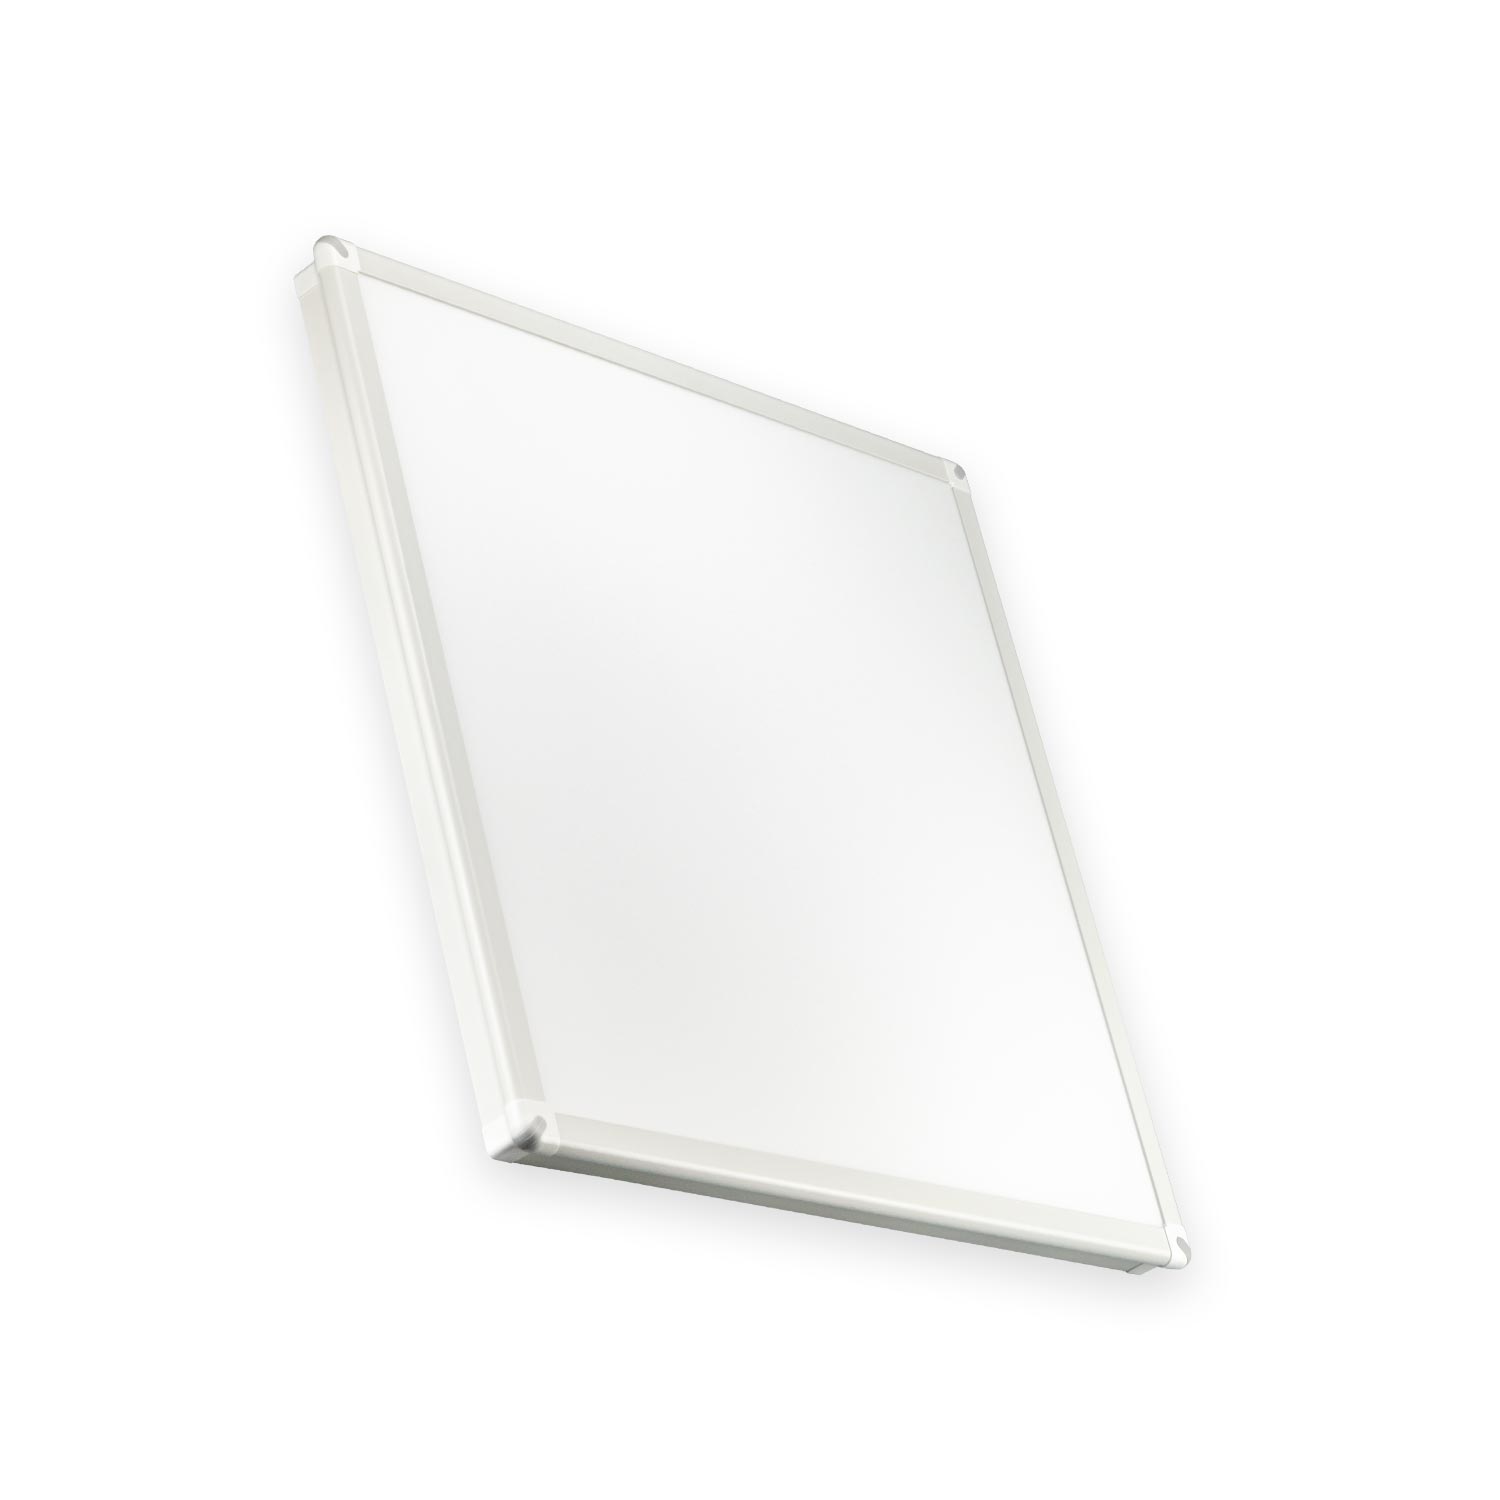 Panel LED 40W SURFACE LIFUD superficie blanco 600*600mm